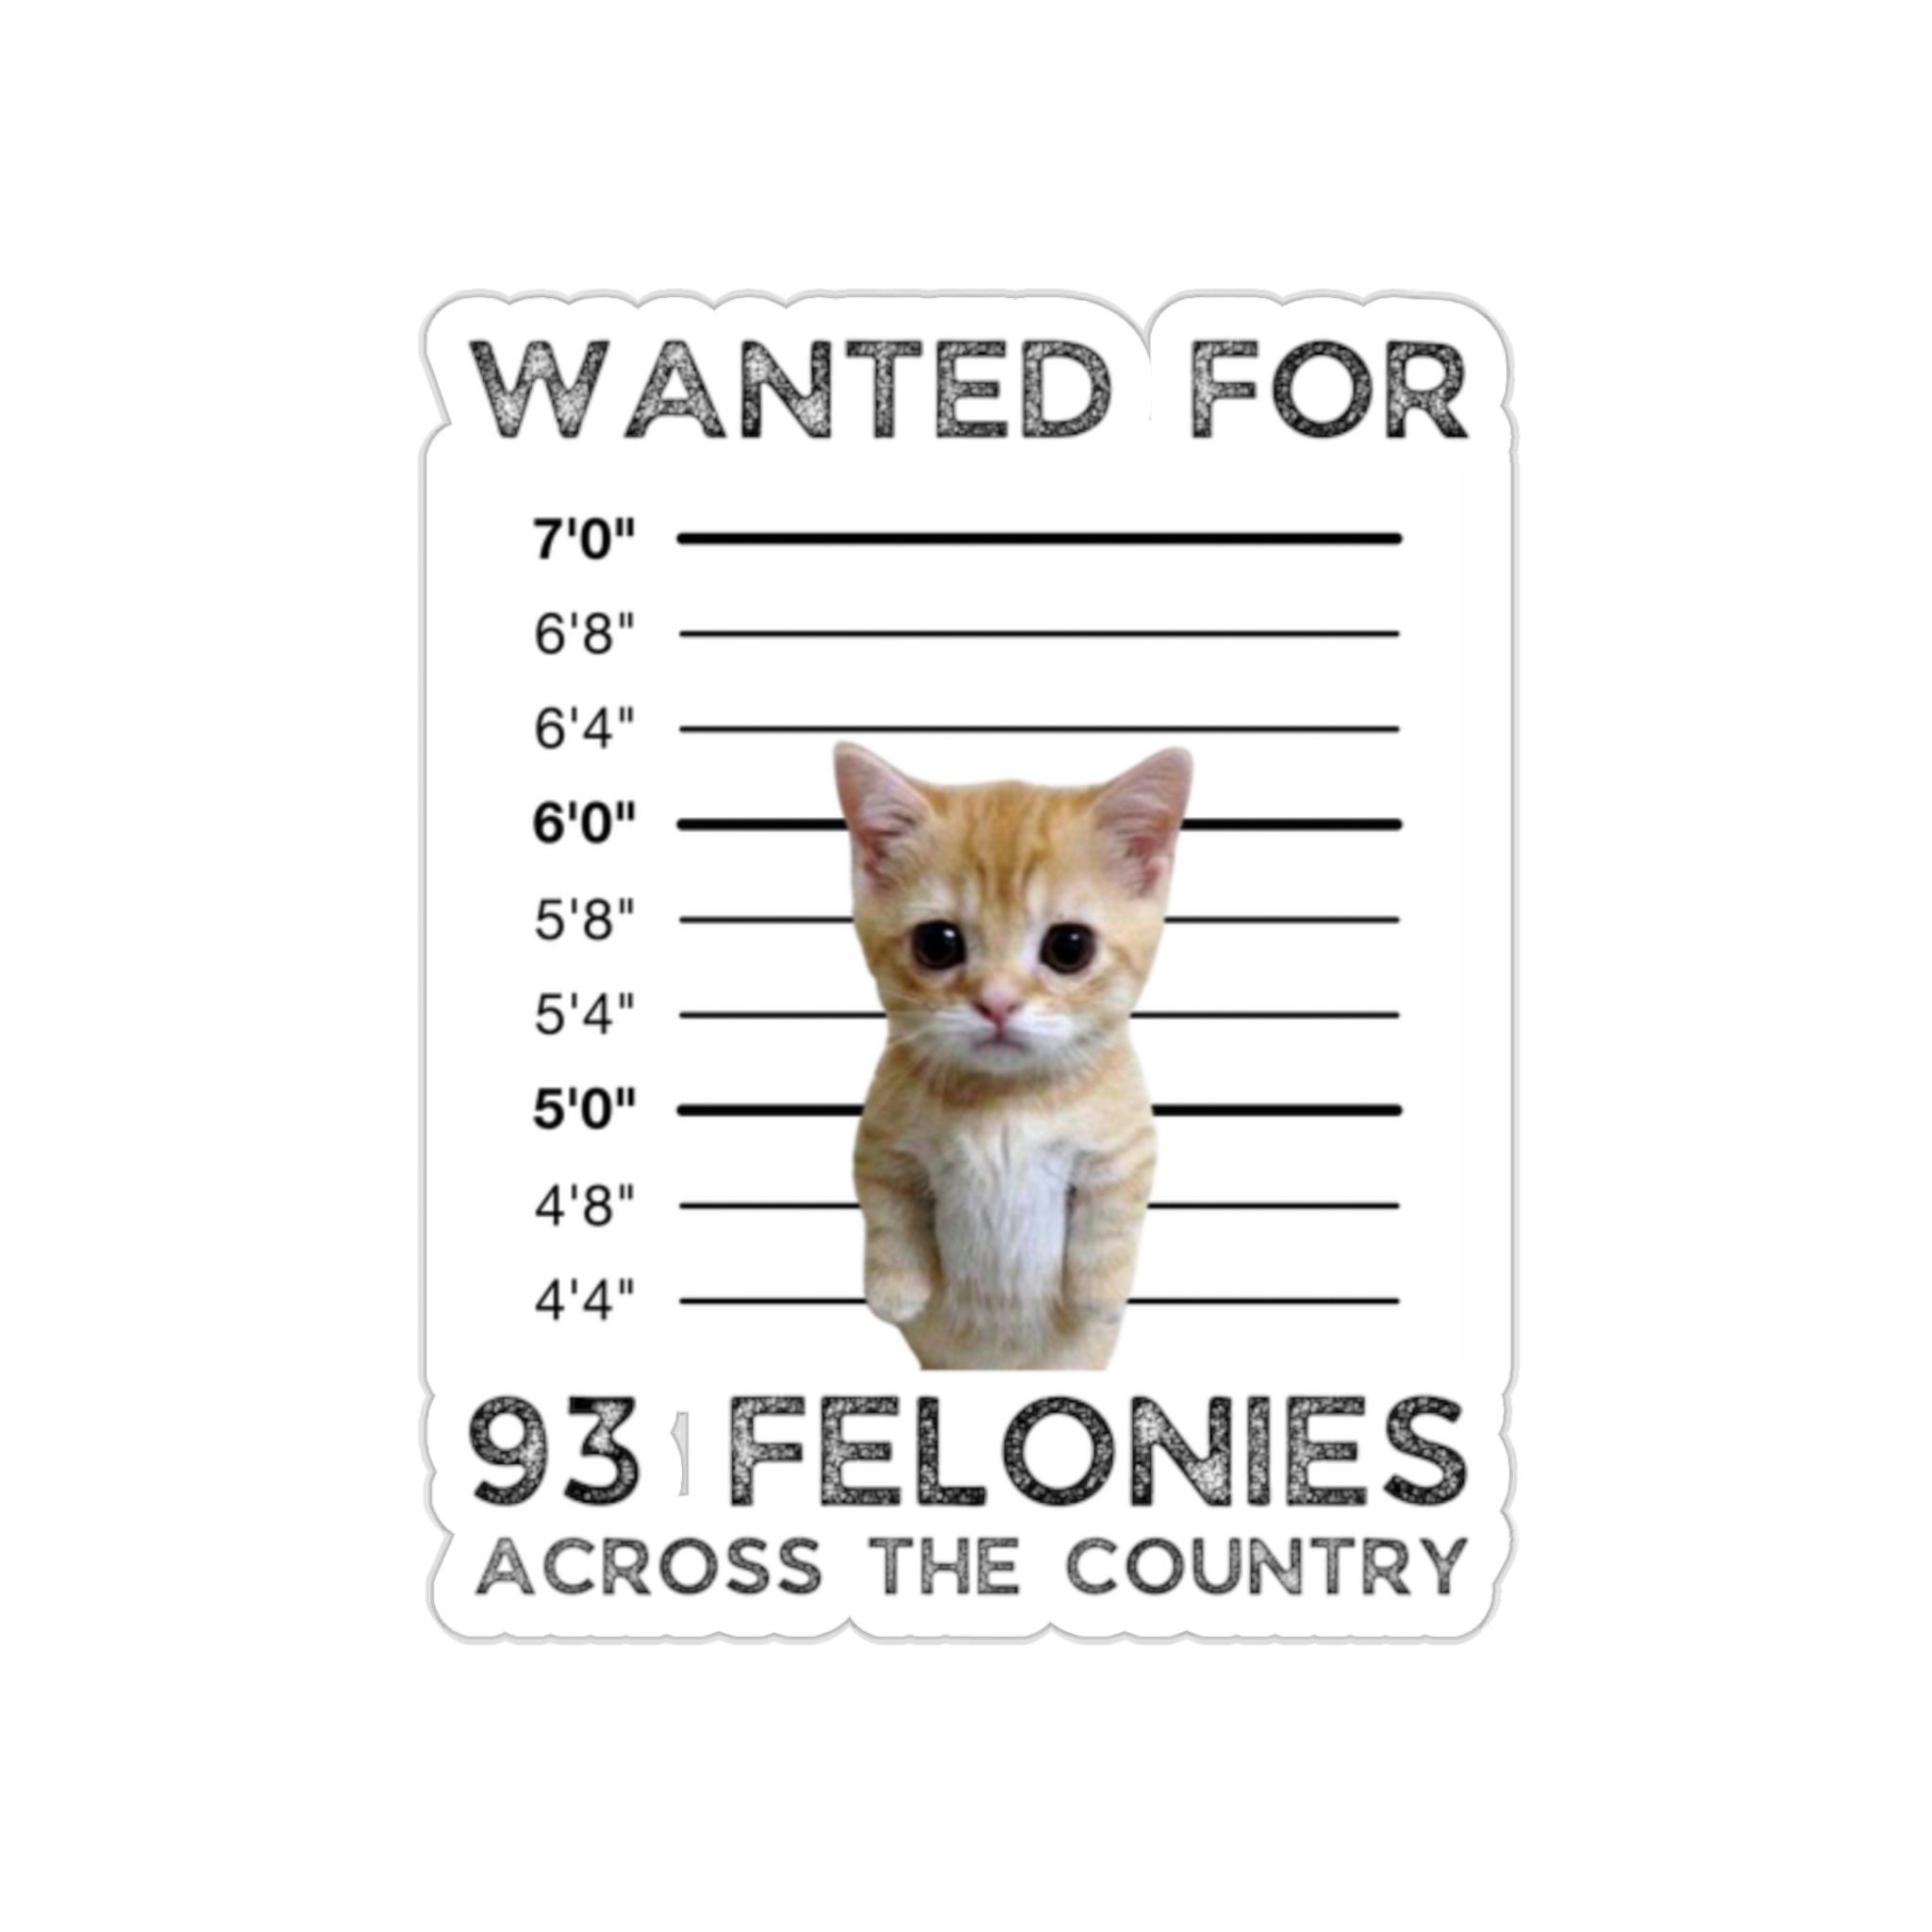 El Gato Wanted Poster Meme Sad Crying Kitten Cute Meme Cat El